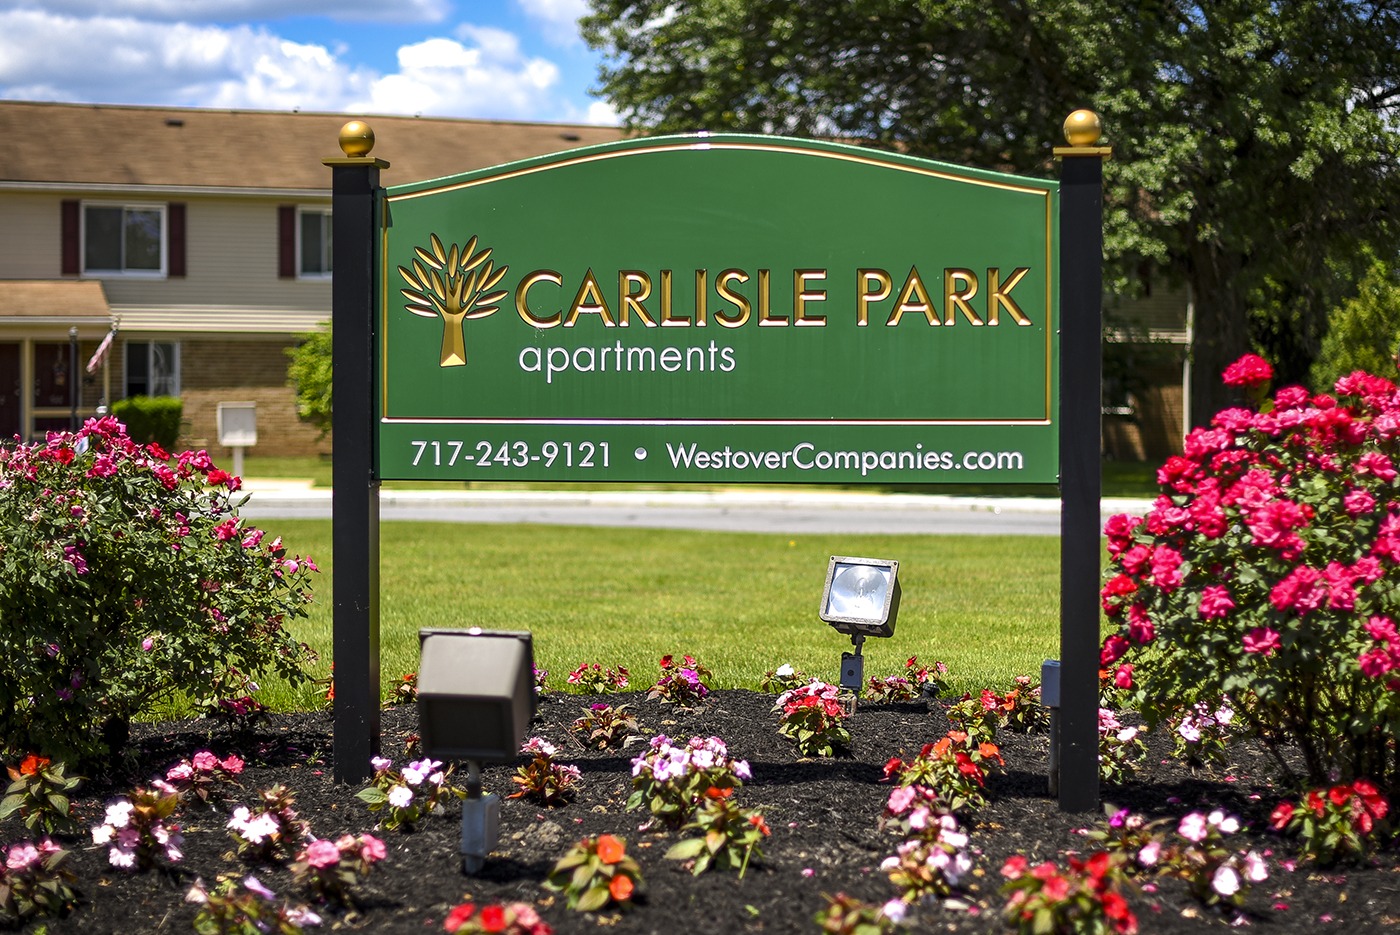 Carlisle Park apartments sign